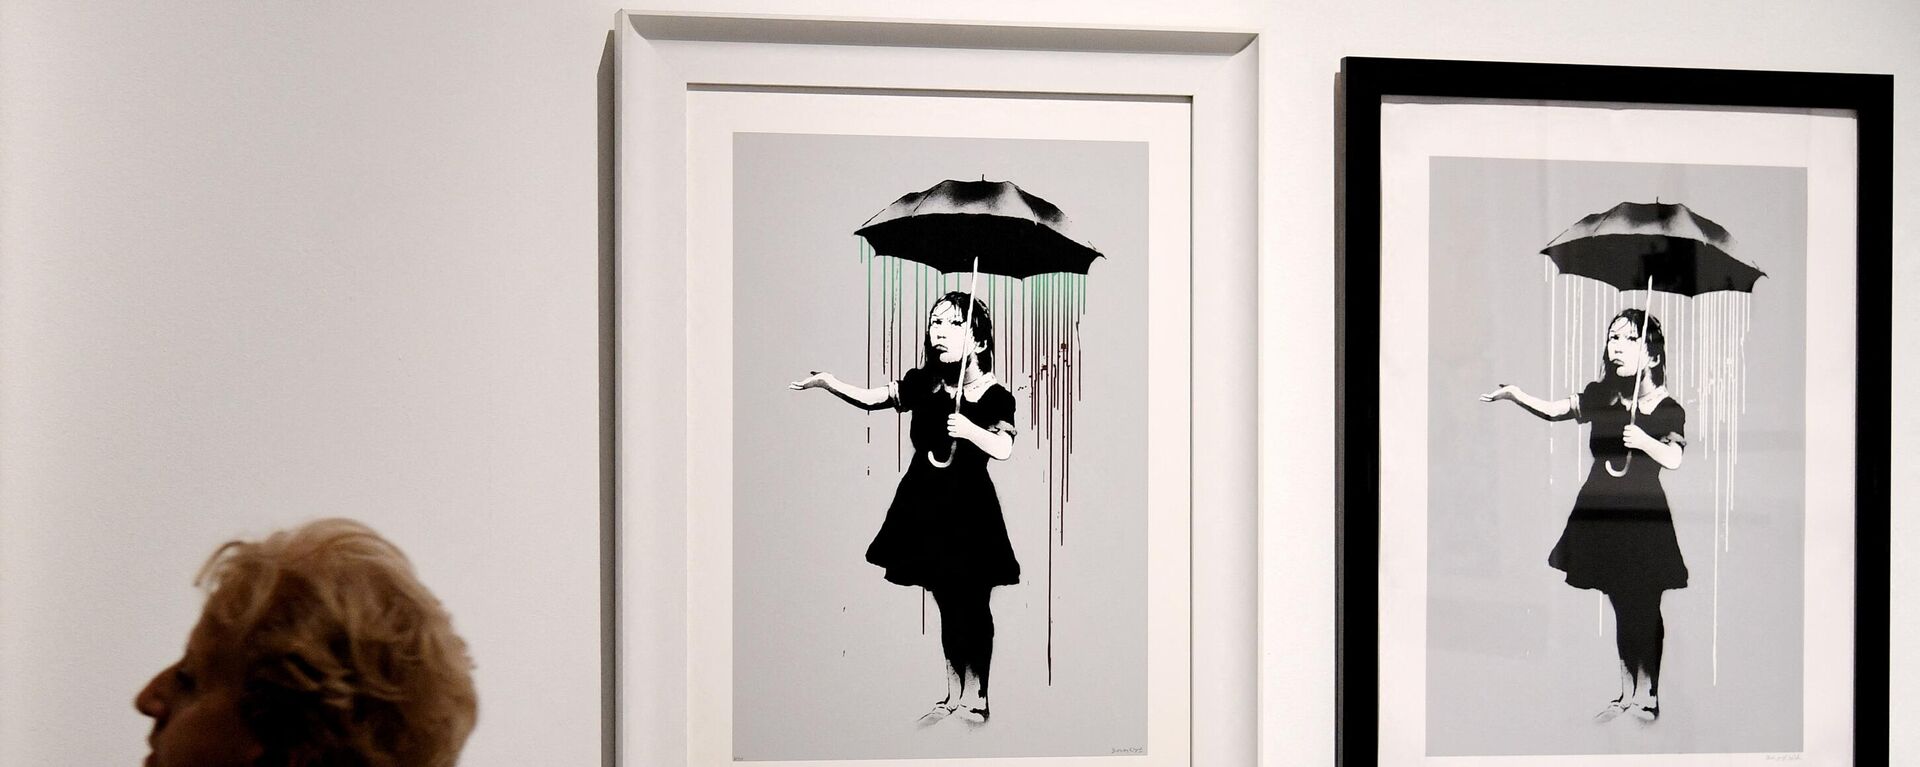 La obra de Banksy 'Chica con paraguas'  - Sputnik Mundo, 1920, 23.06.2021